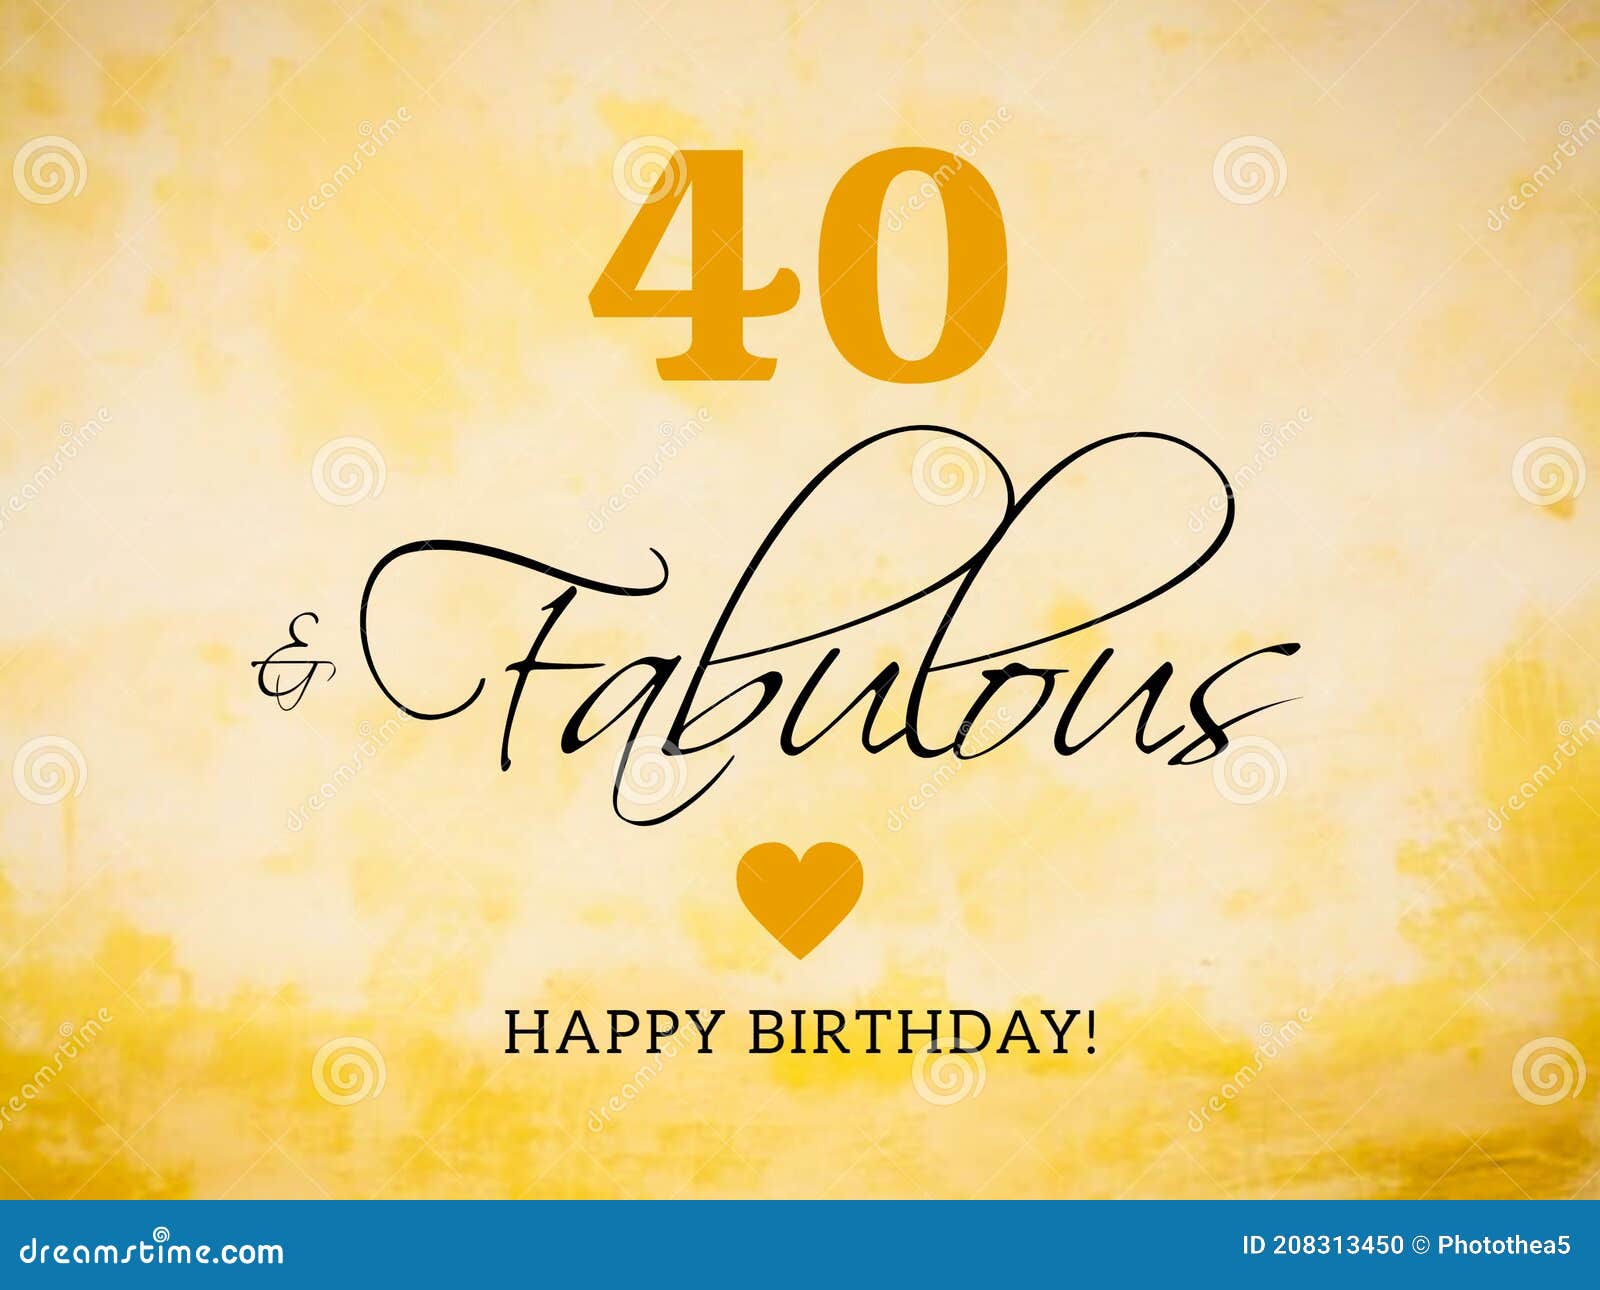 40th-birthday-card-wishes-illustration-stock-illustration